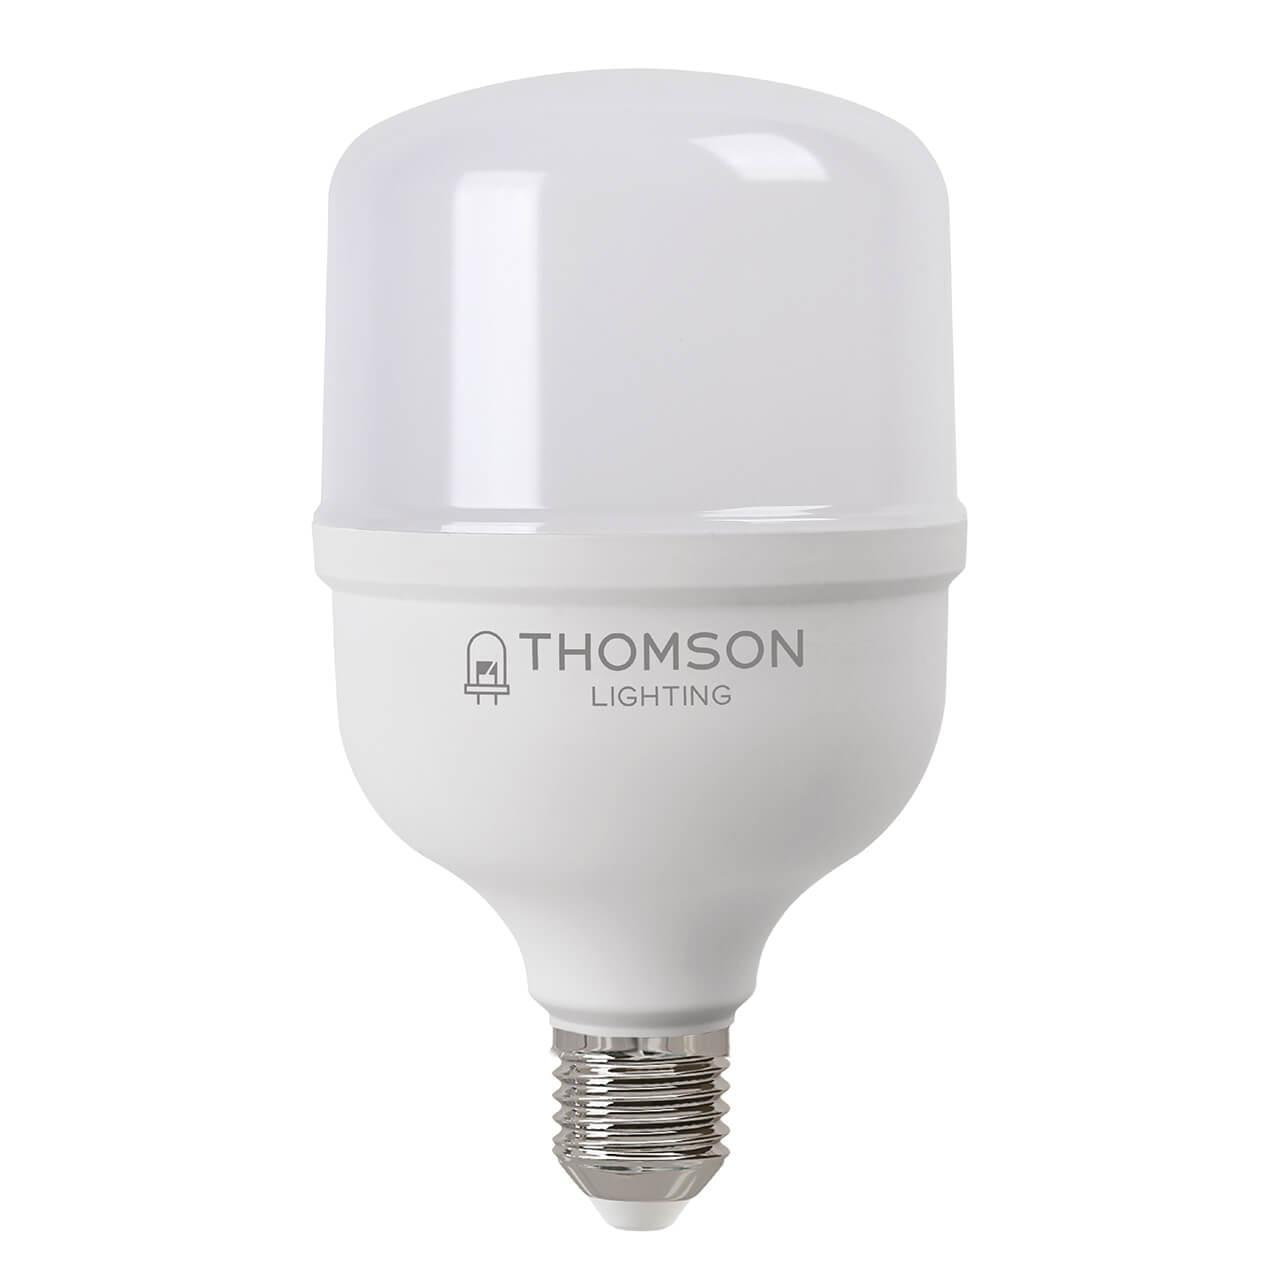 TH-B2364 Лампа светодиодная E27 30W 6500K Thomson